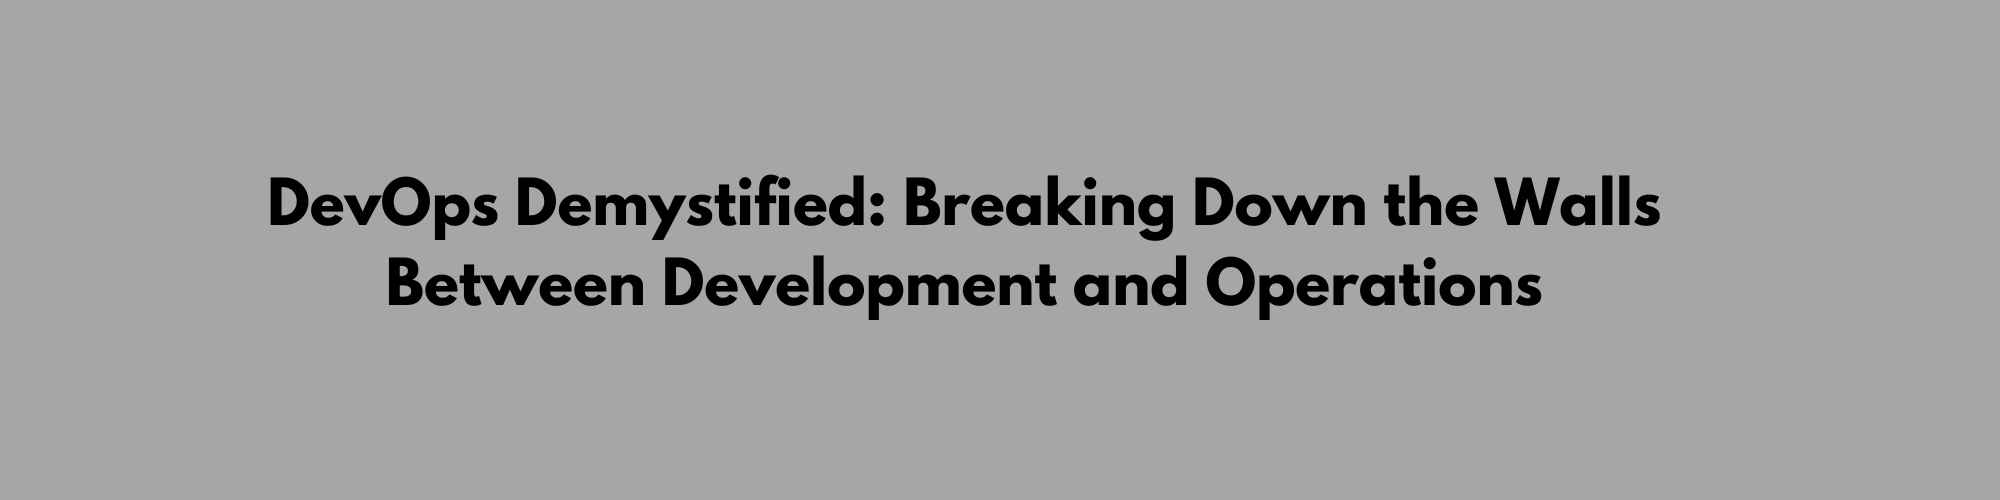 DevOps Demystified: Breaking Down the Walls Between Development and Operations